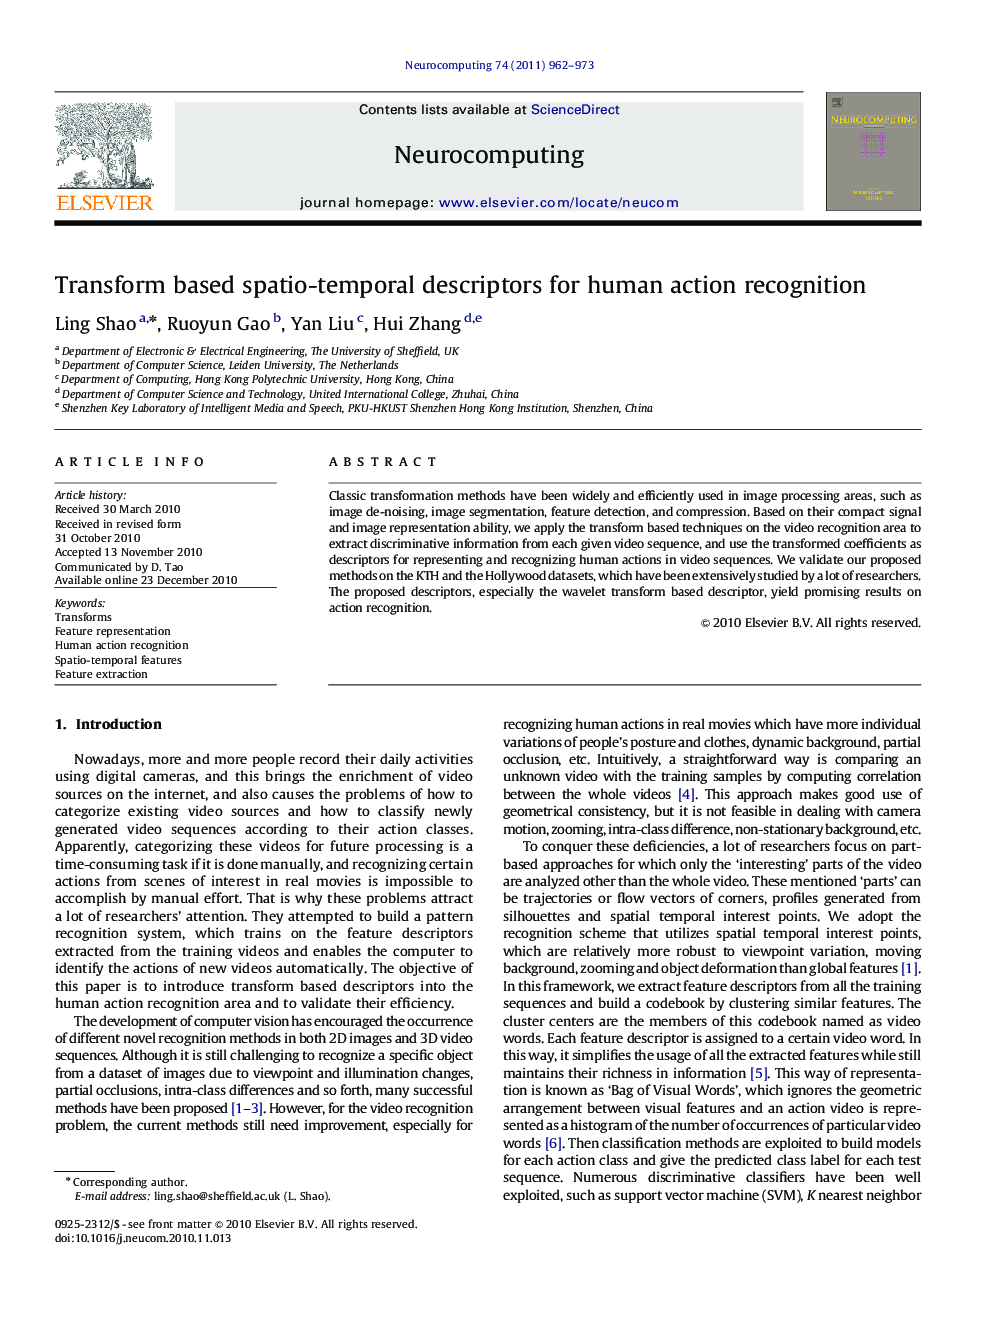 Transform based spatio-temporal descriptors for human action recognition